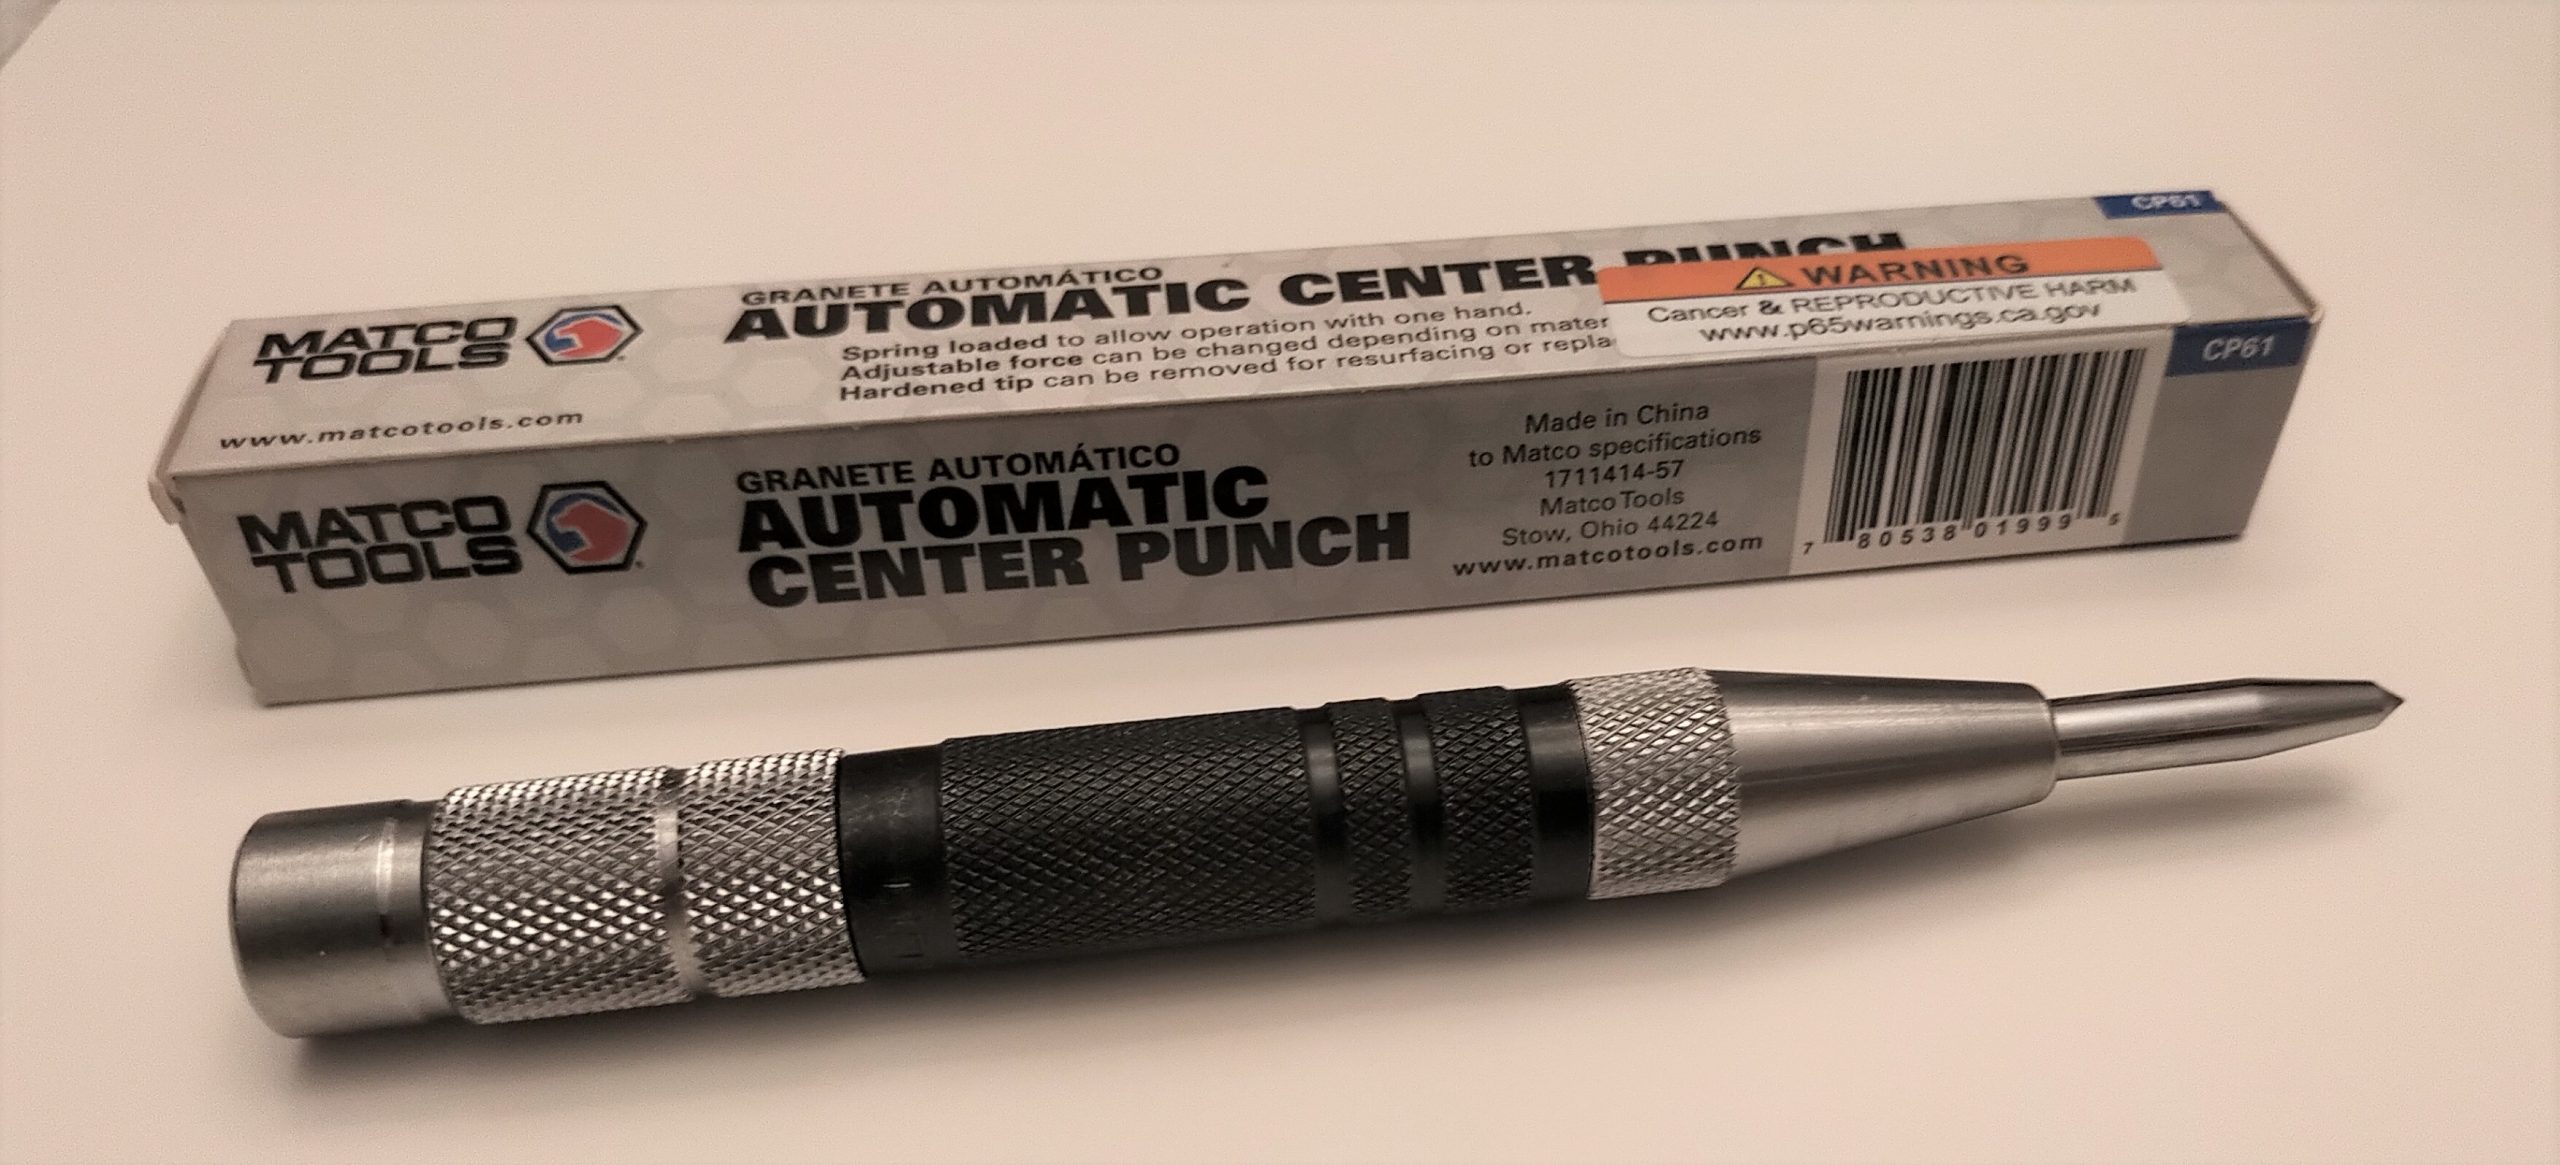 MATCO Automatic Center Punch